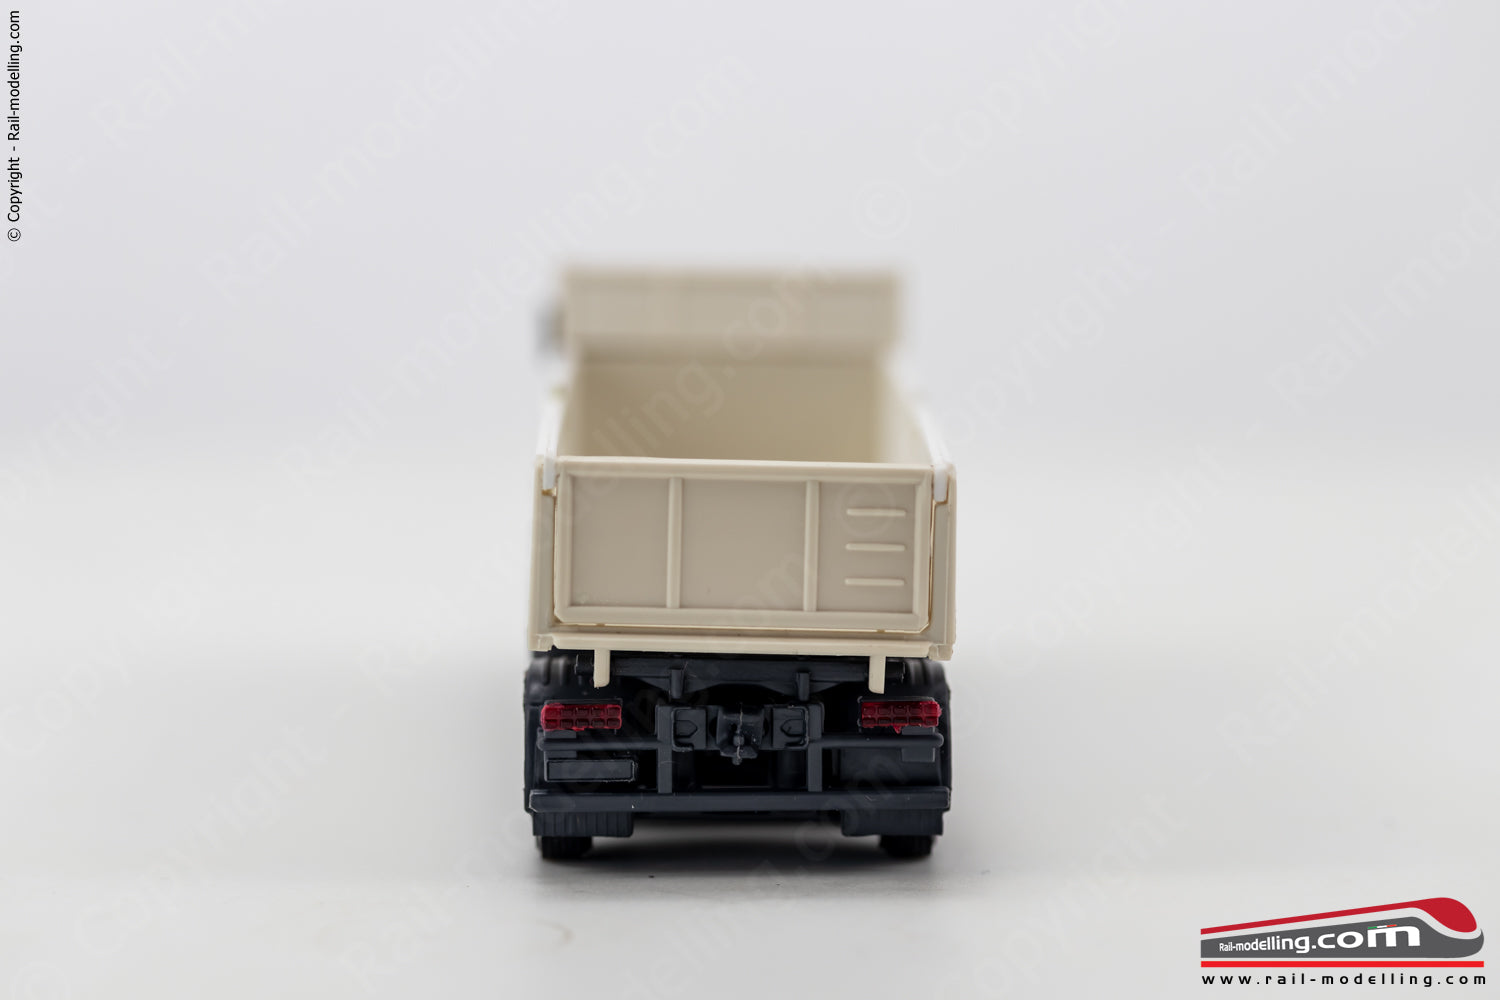 OLM 004 - H0 1:87 - Camion cassone ribaltabile Scania 8x4 cabina bianca